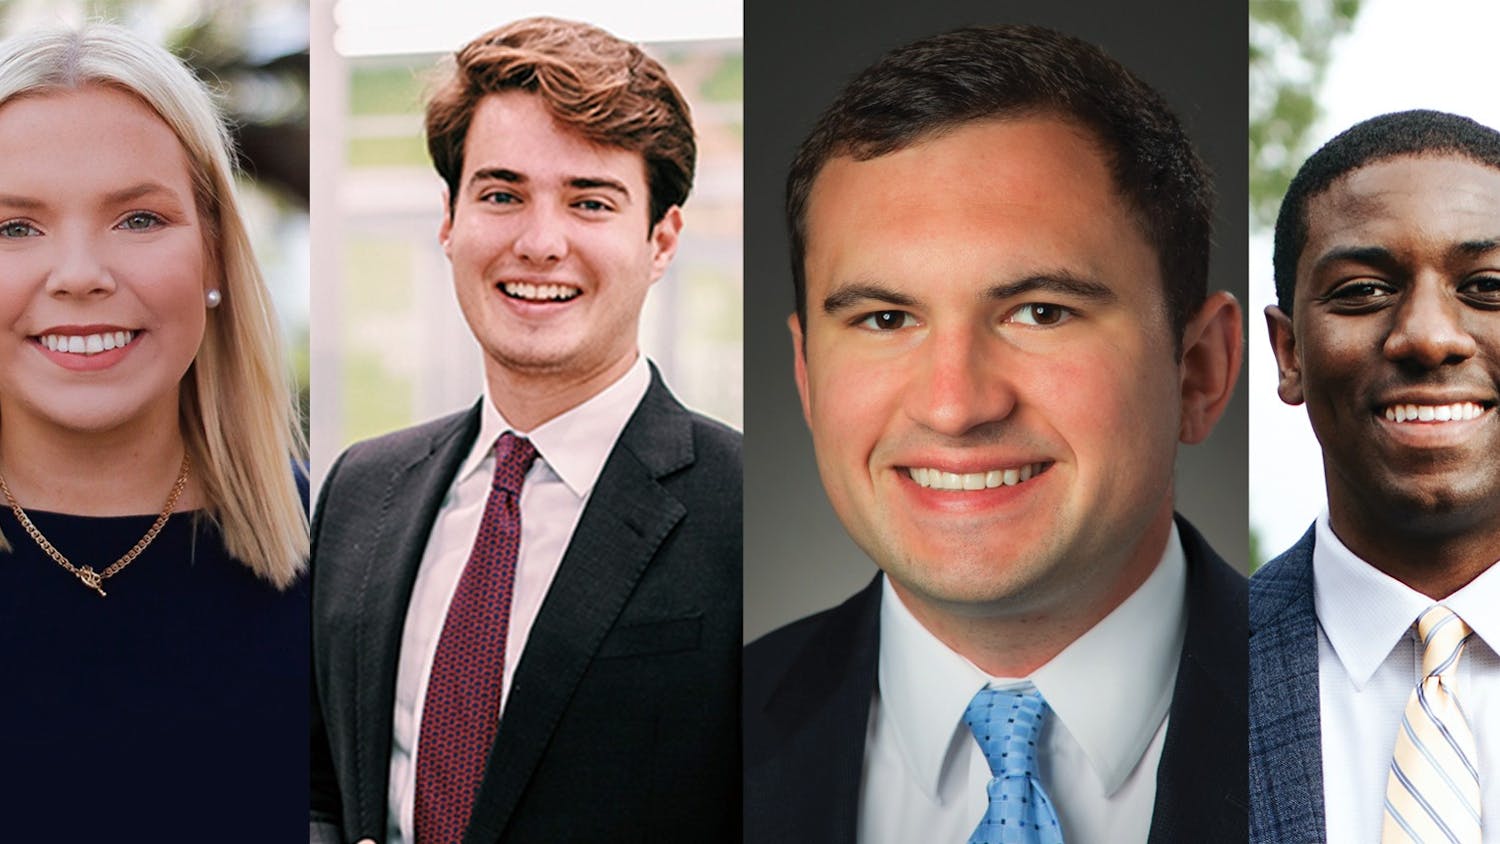 Former student body presidents, from left to right: Issy Rushton, 2020-2021; Luke Rankin, 2019-2020; Ross Lordo, 2017-2018; Taylor Wright, 2018-2019.